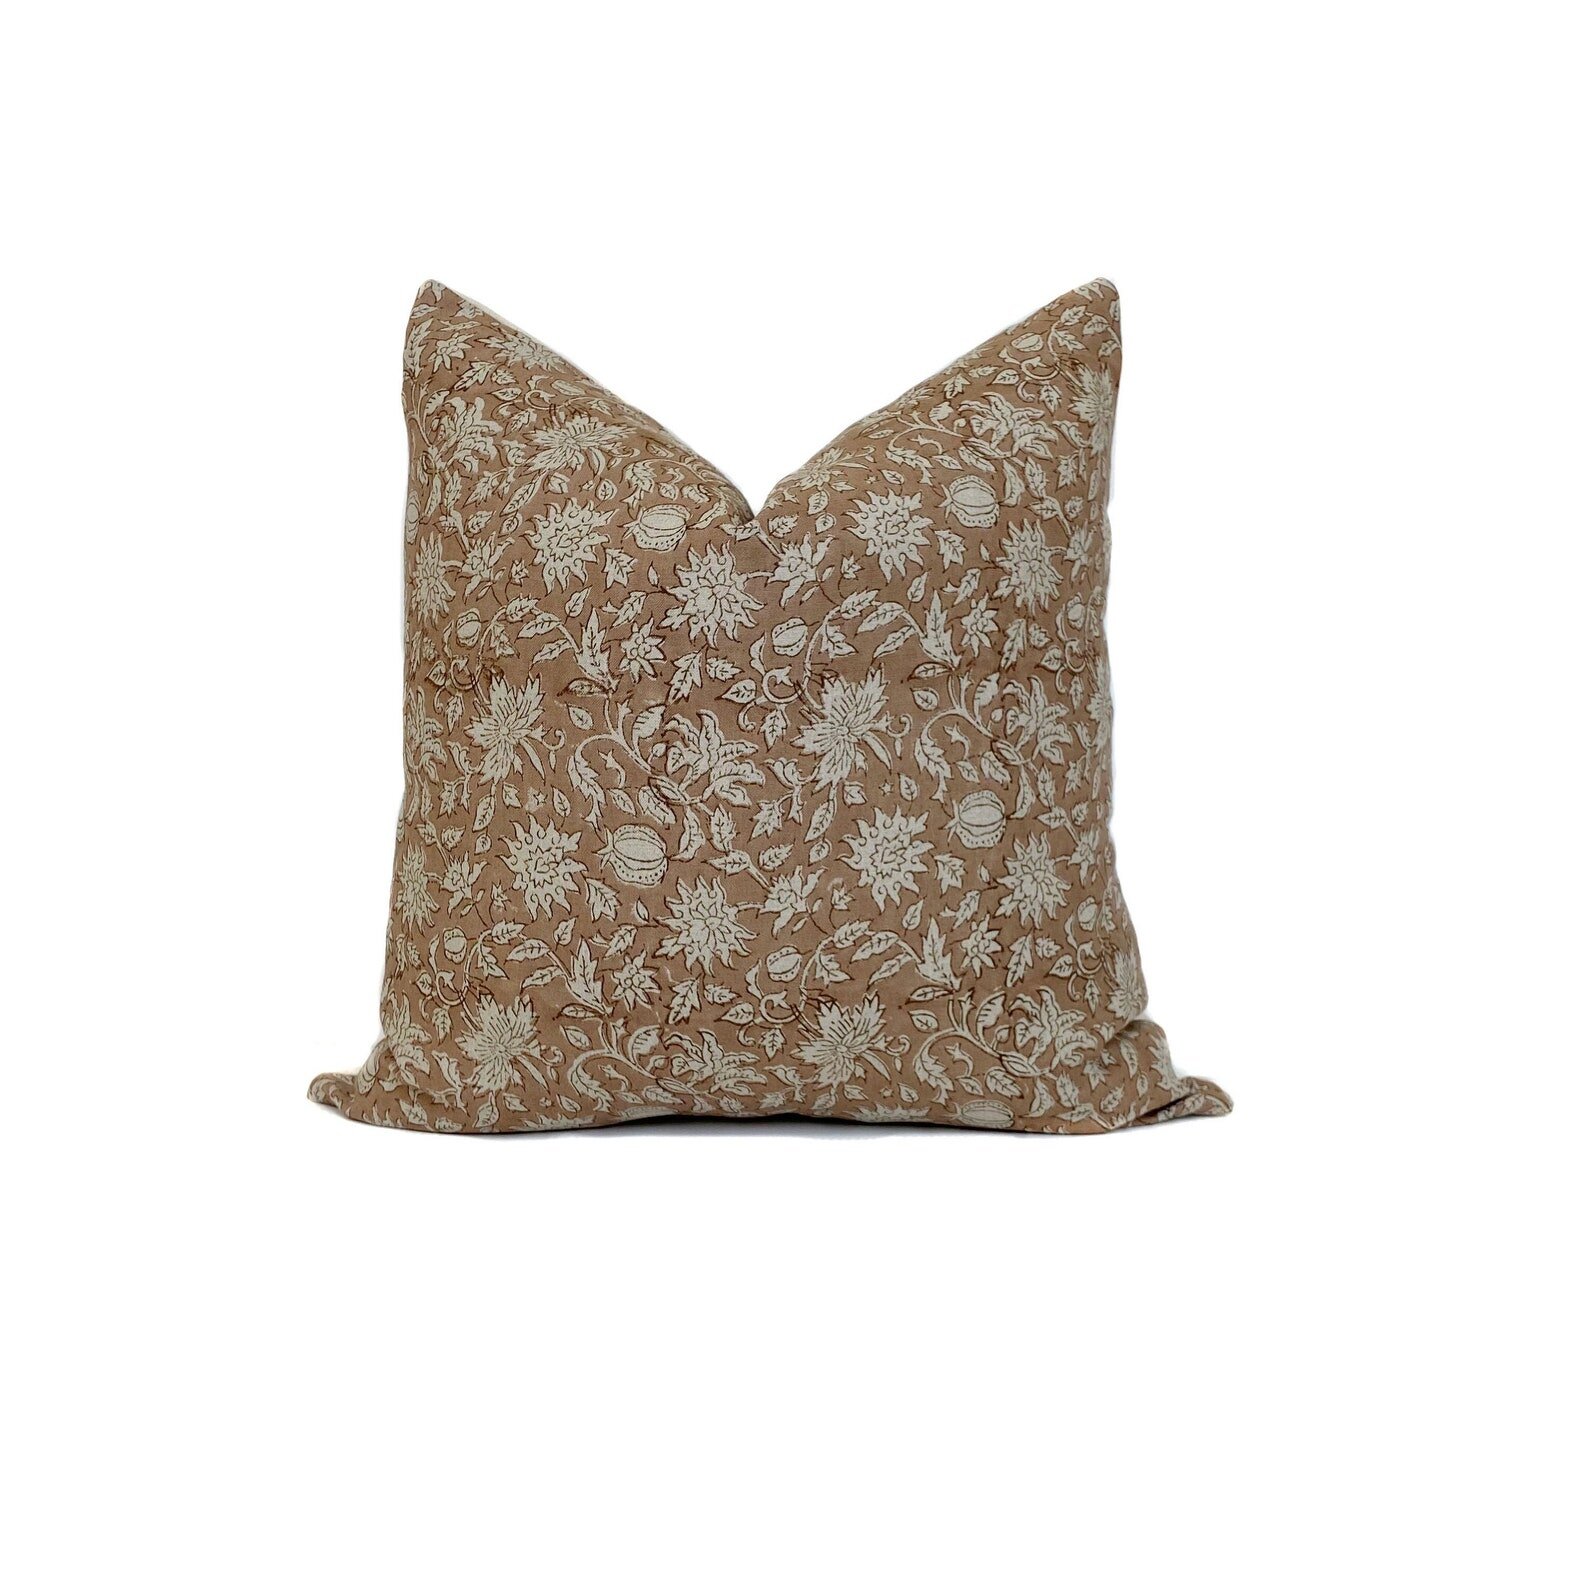 Savannah Designer Pillow Cover, Rust Floral Pillow, Blush Floral Pillow, High End Throw Pillow